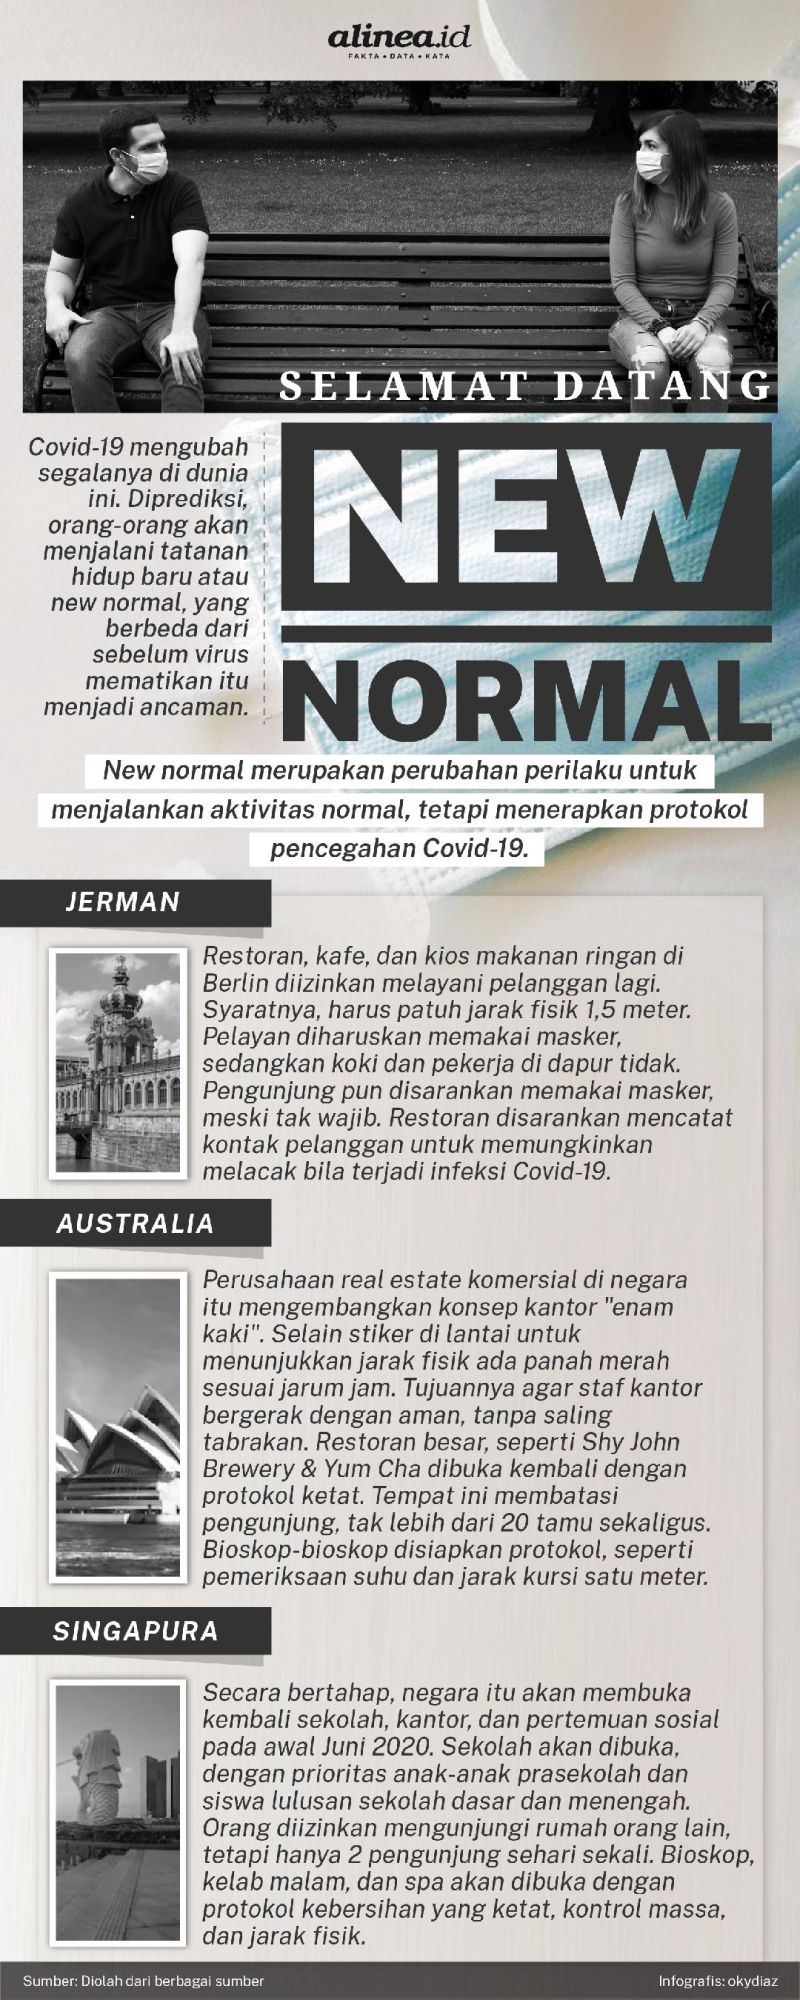 Infografik new normal. Alinea.id/Oky Diaz.